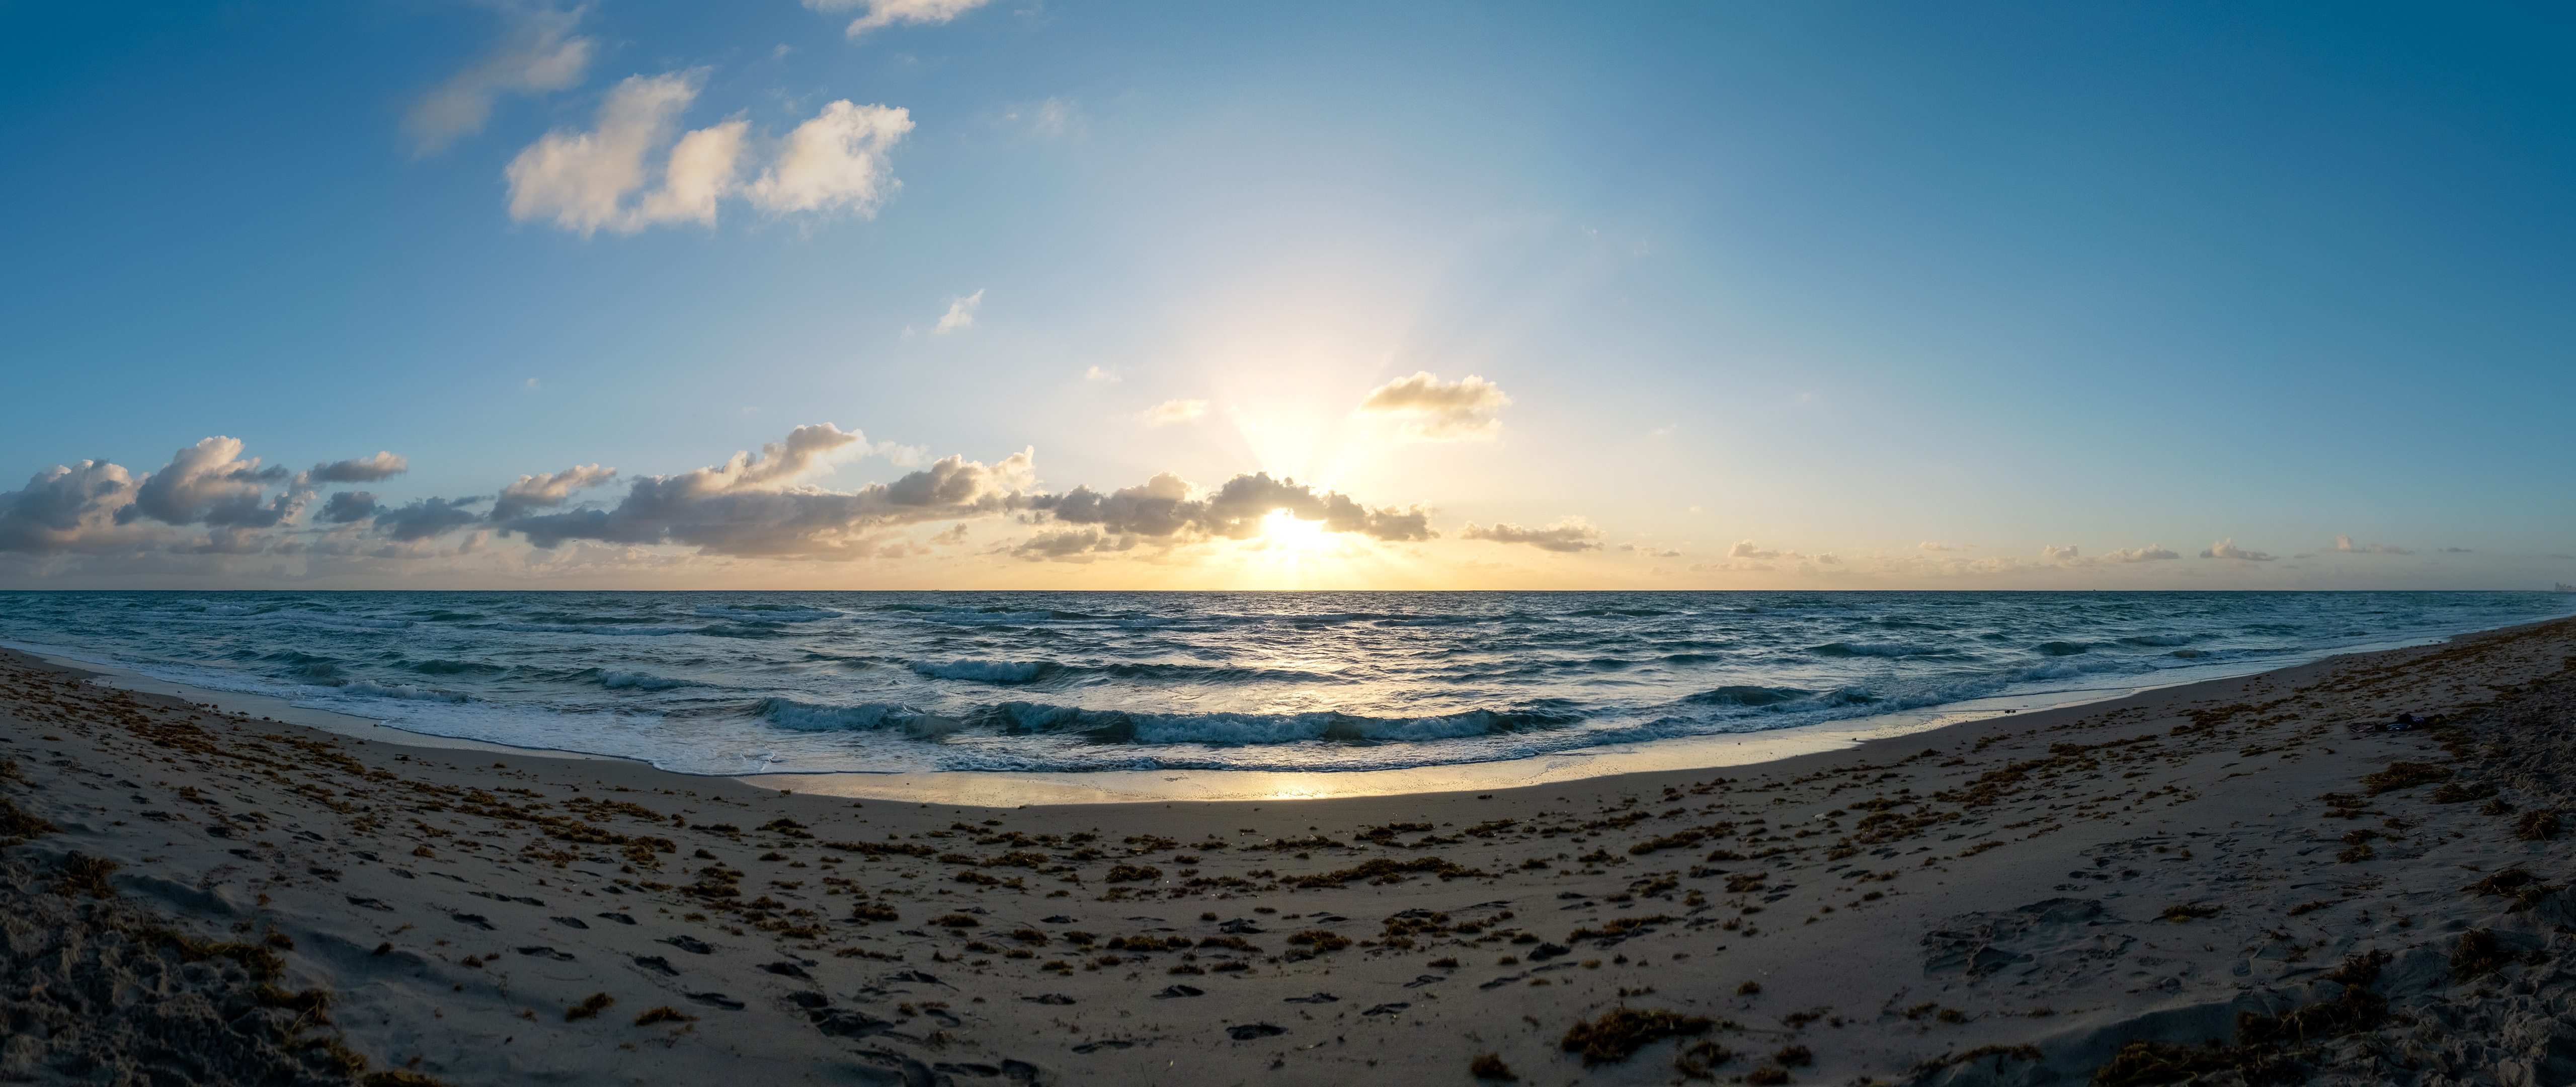 General 5120x2160 Florida beach sea atlantic ocean sunrise sky horizon clouds wide angle panorama sand sunlight water